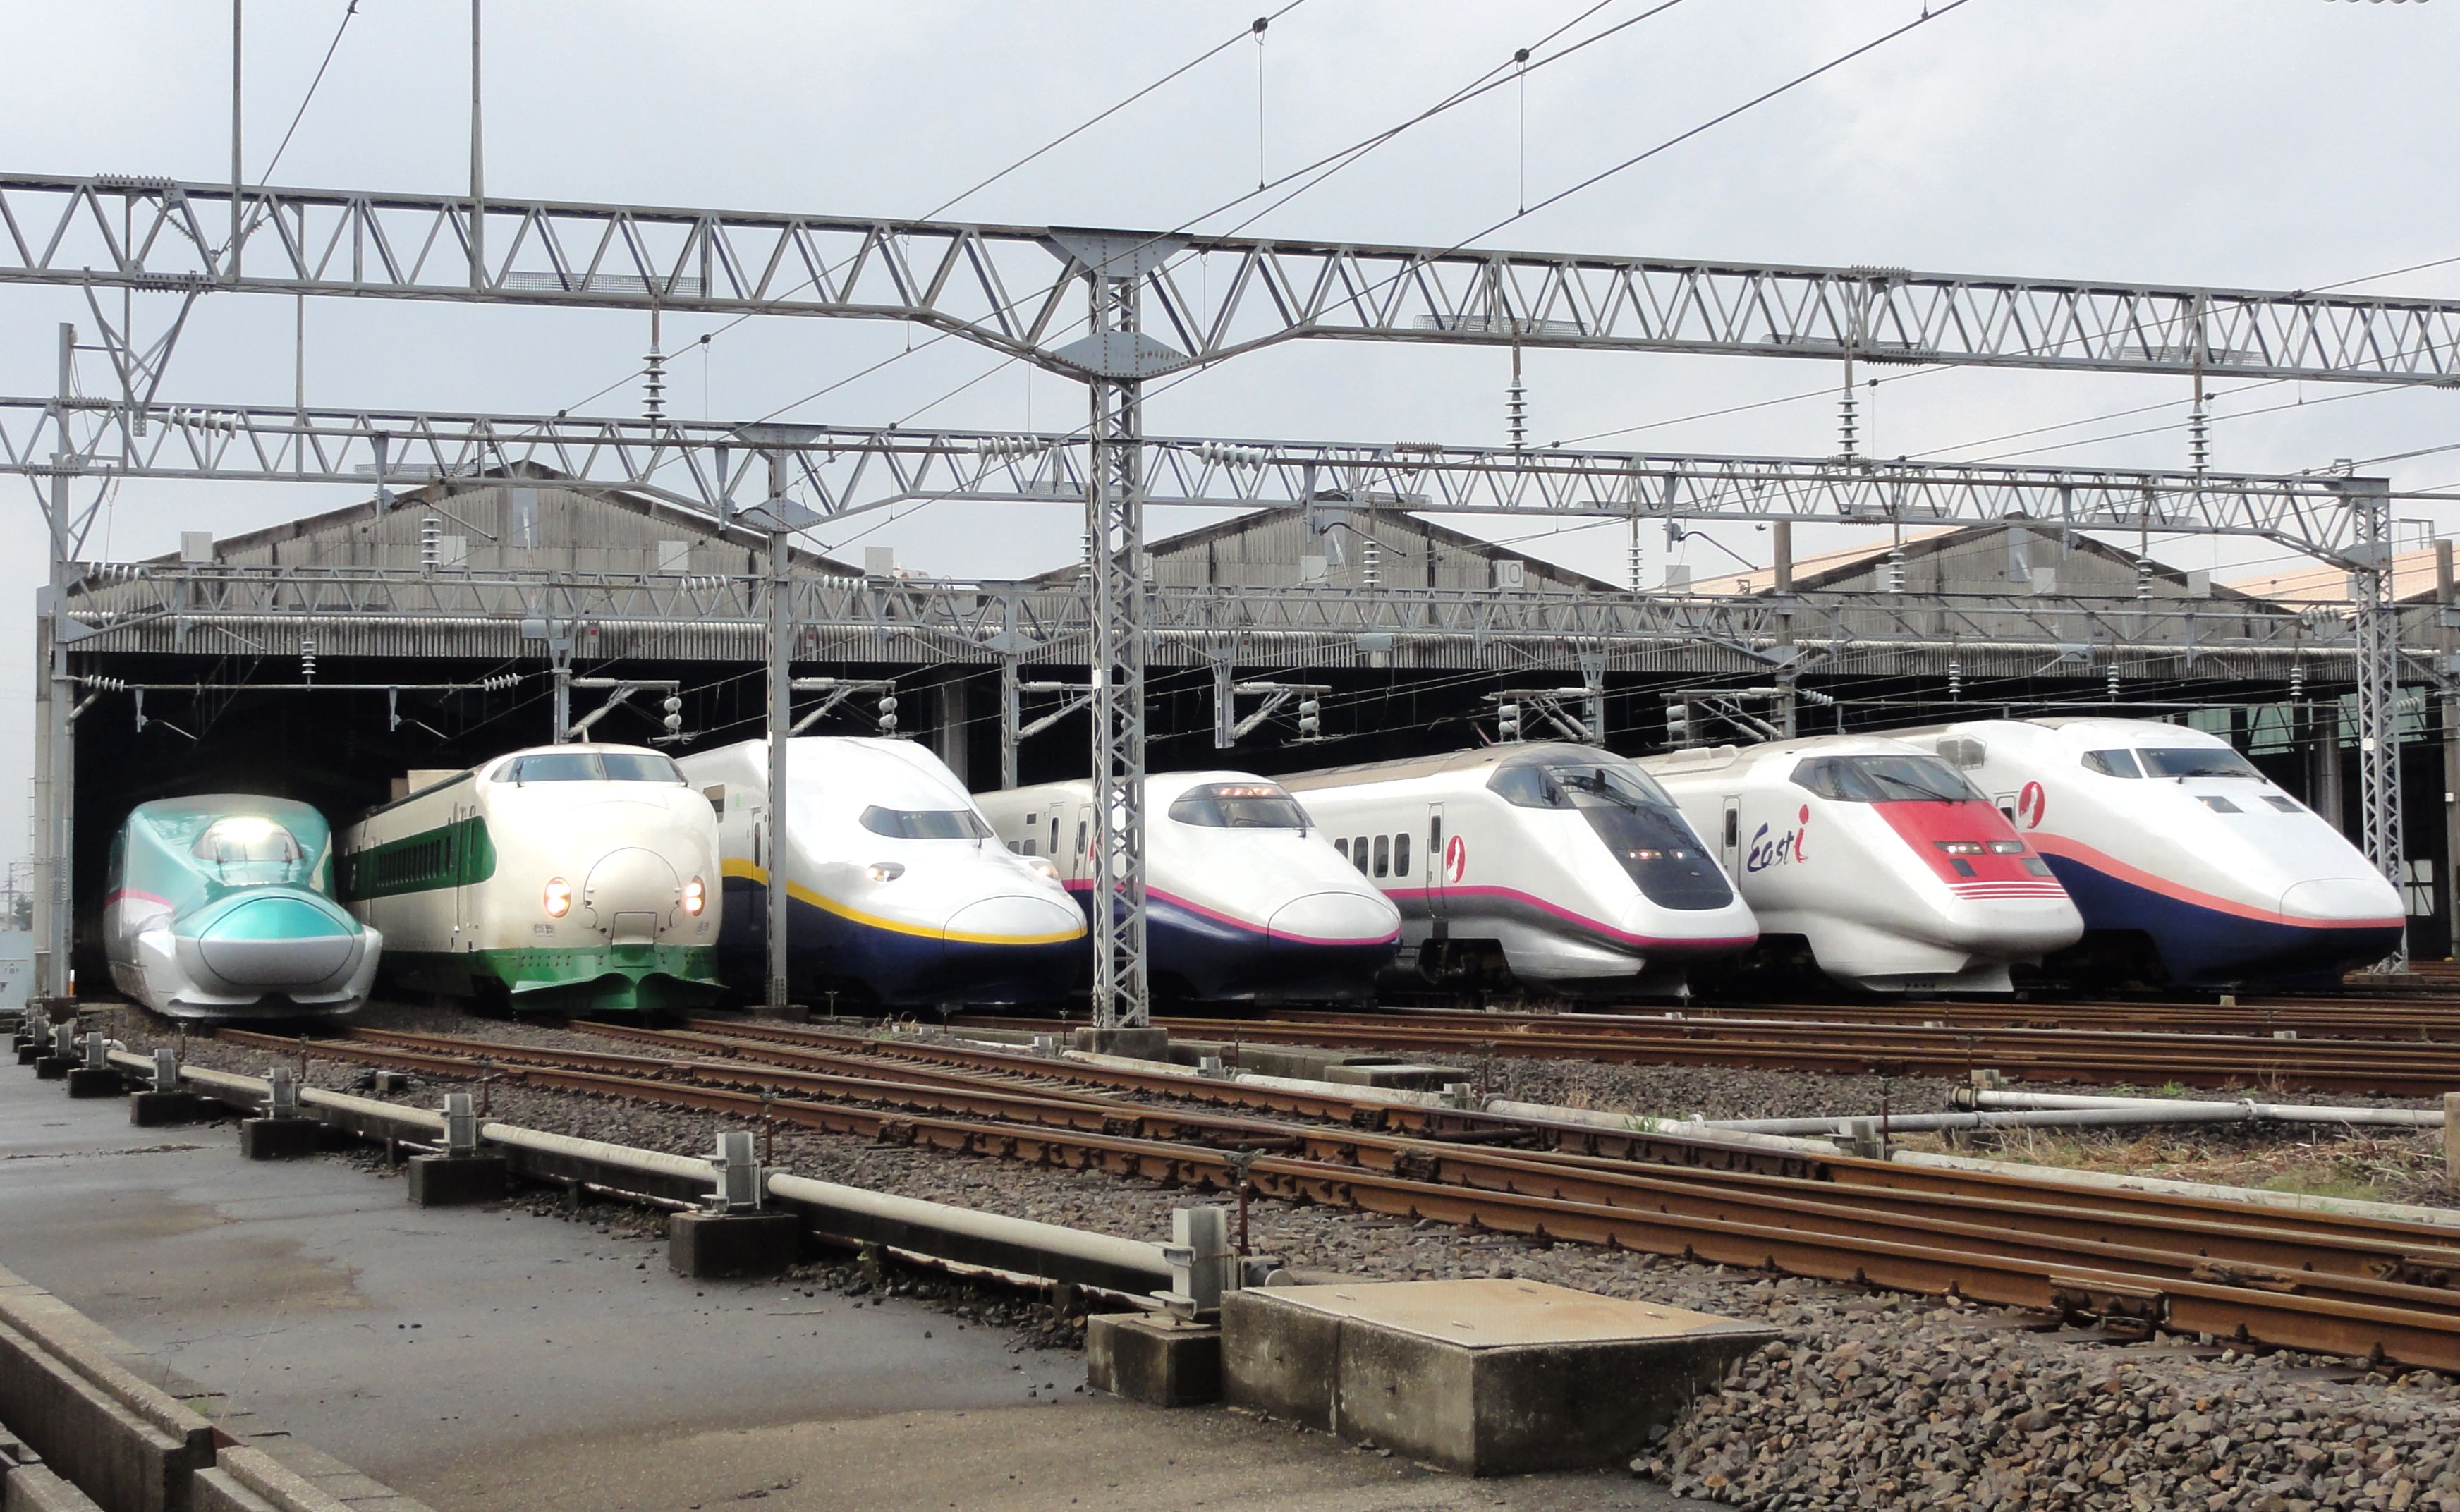 Bullet Train. Japan's high speed bullet trains, also known as Shinkansen trains HD Wallpaper